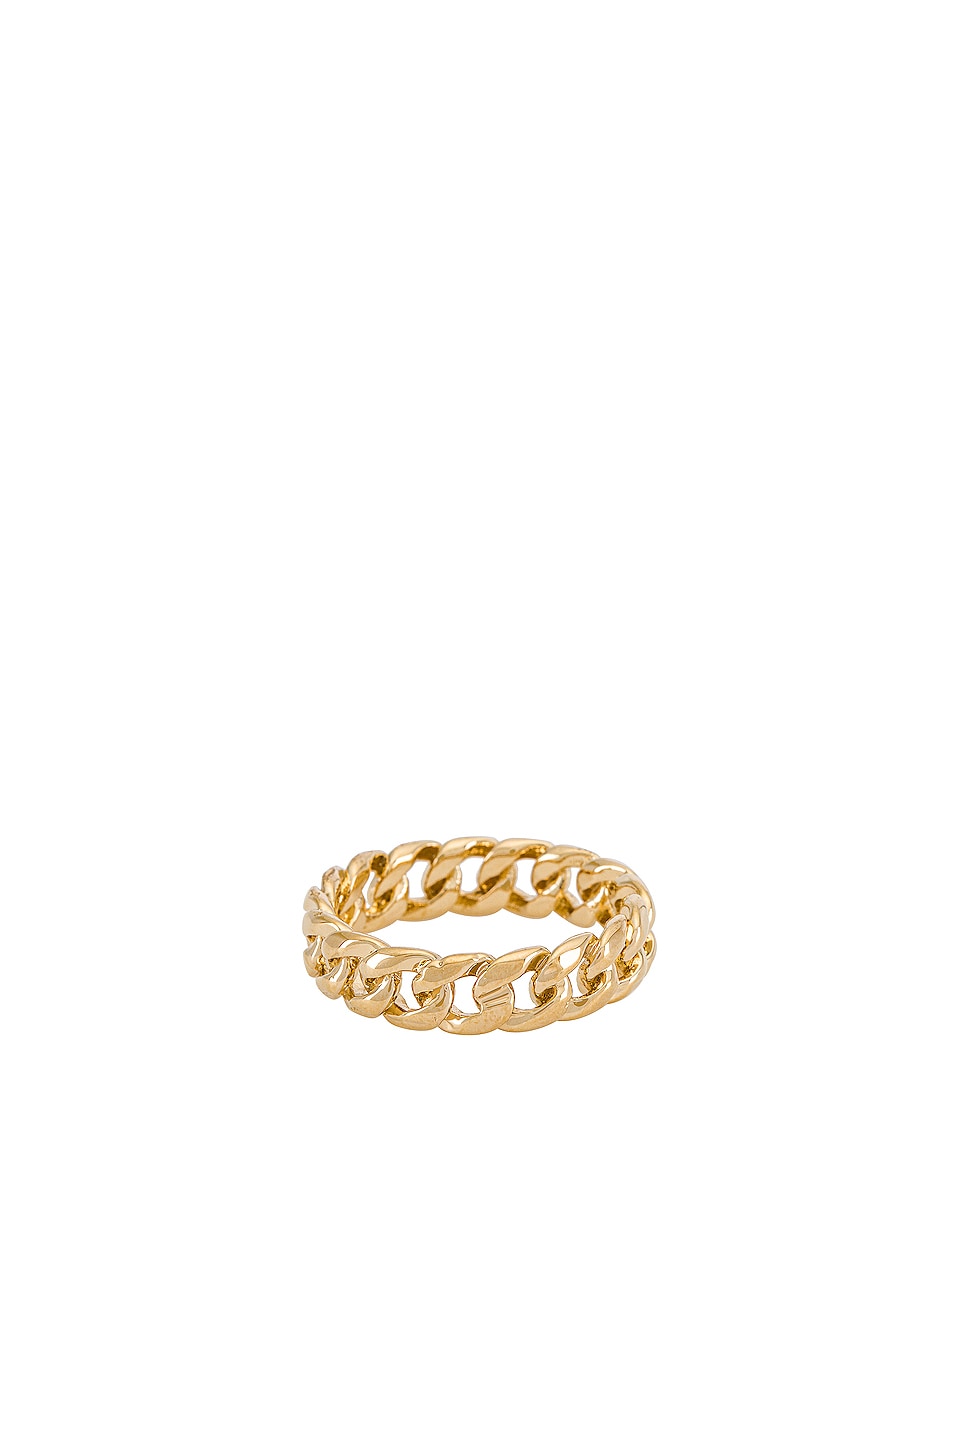 MIRANDA FRYE Rowen Ring in Gold | REVOLVE